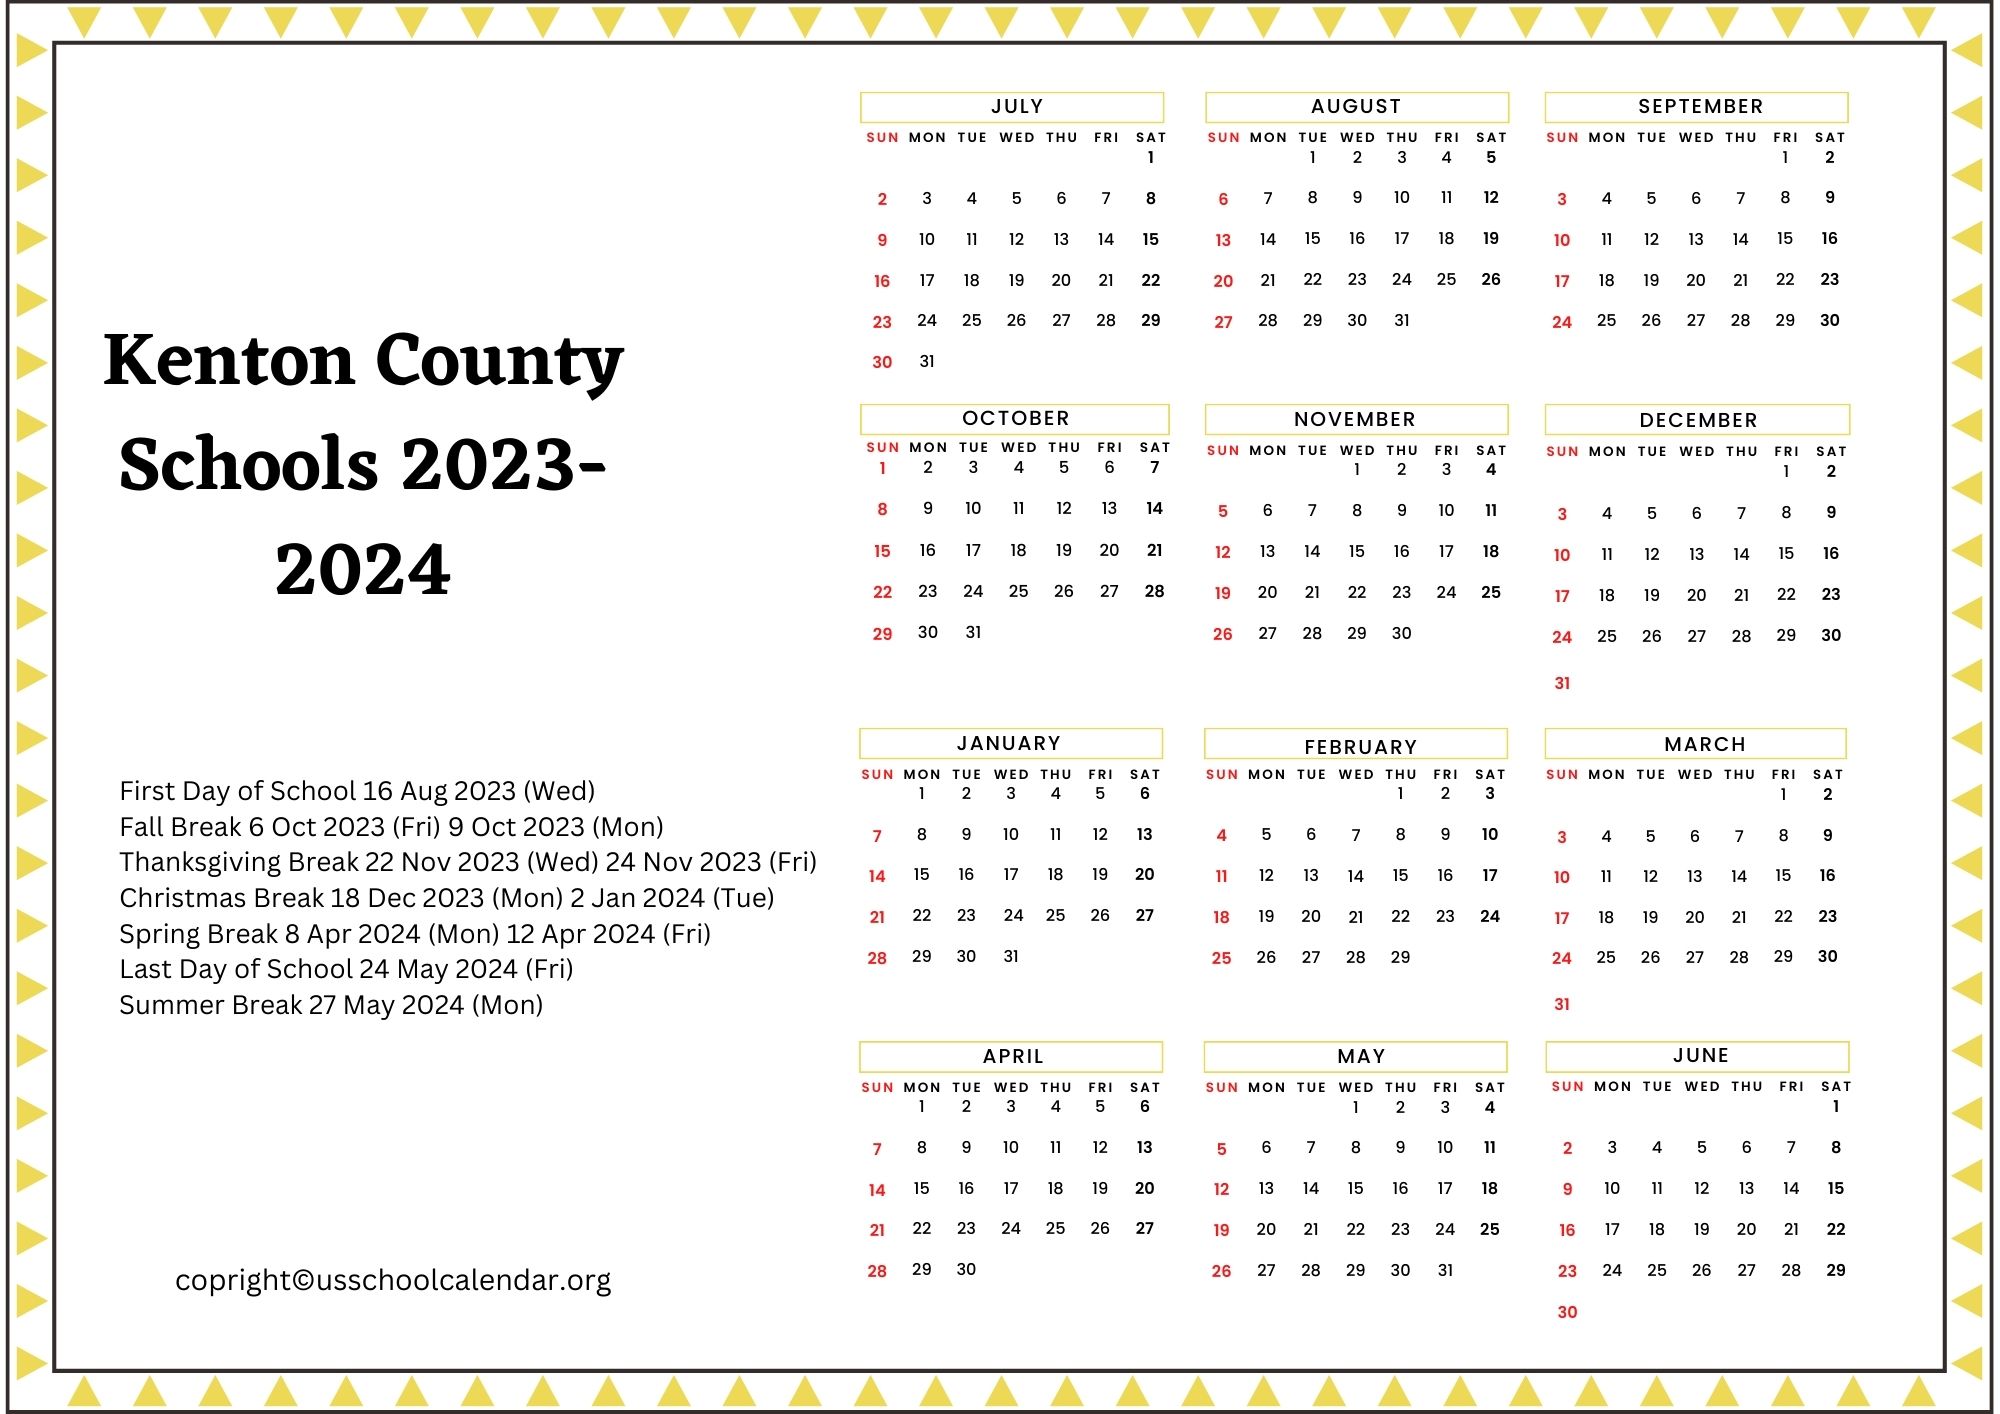 Kenton County Schools Calendar With Holidays 2023 2024